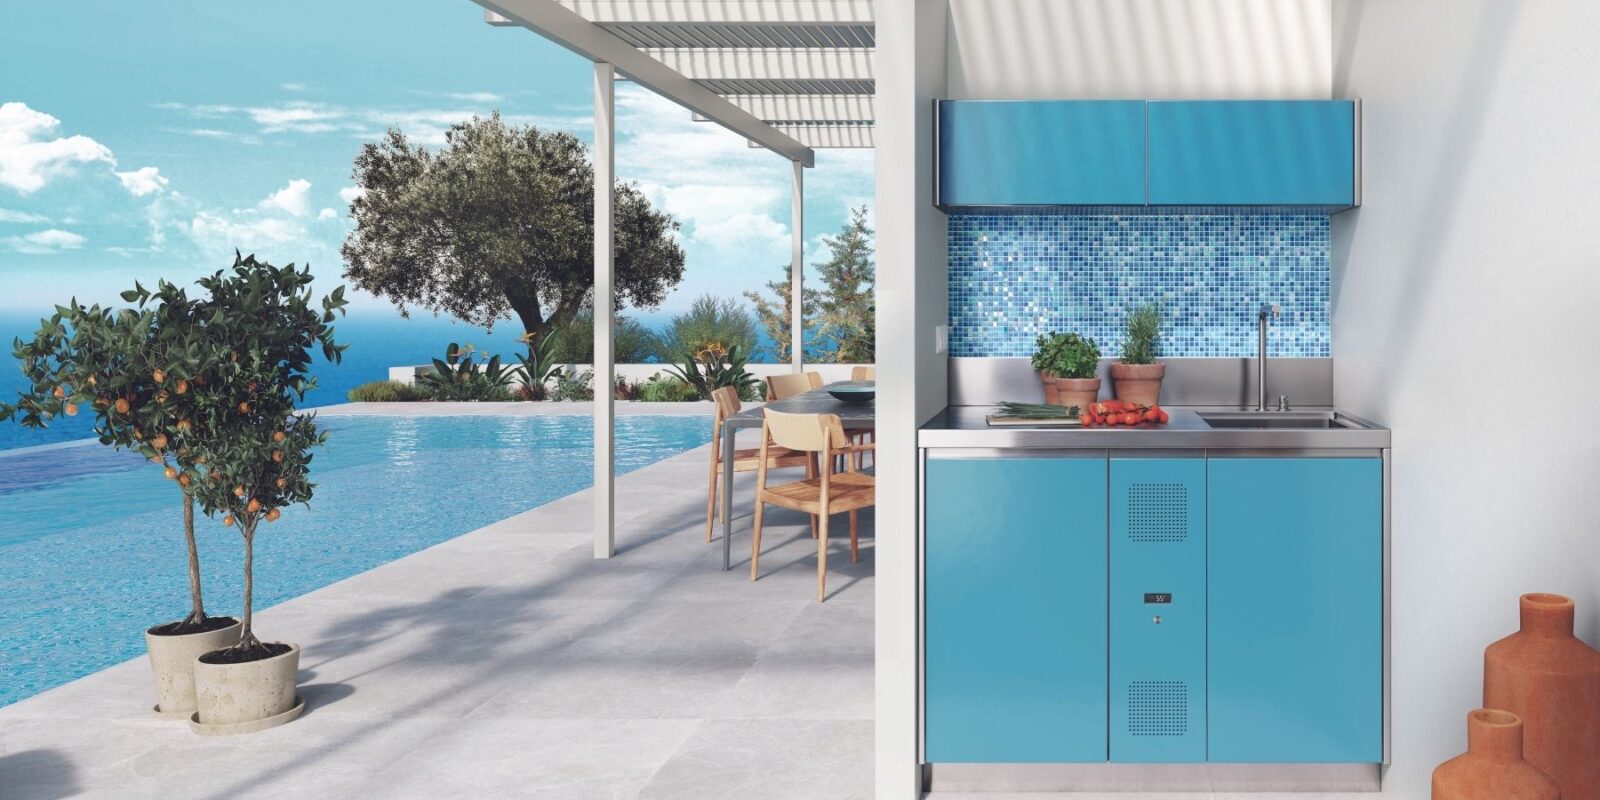 Cucina Cooling station di Abimis a bordo piscina a Mykonos